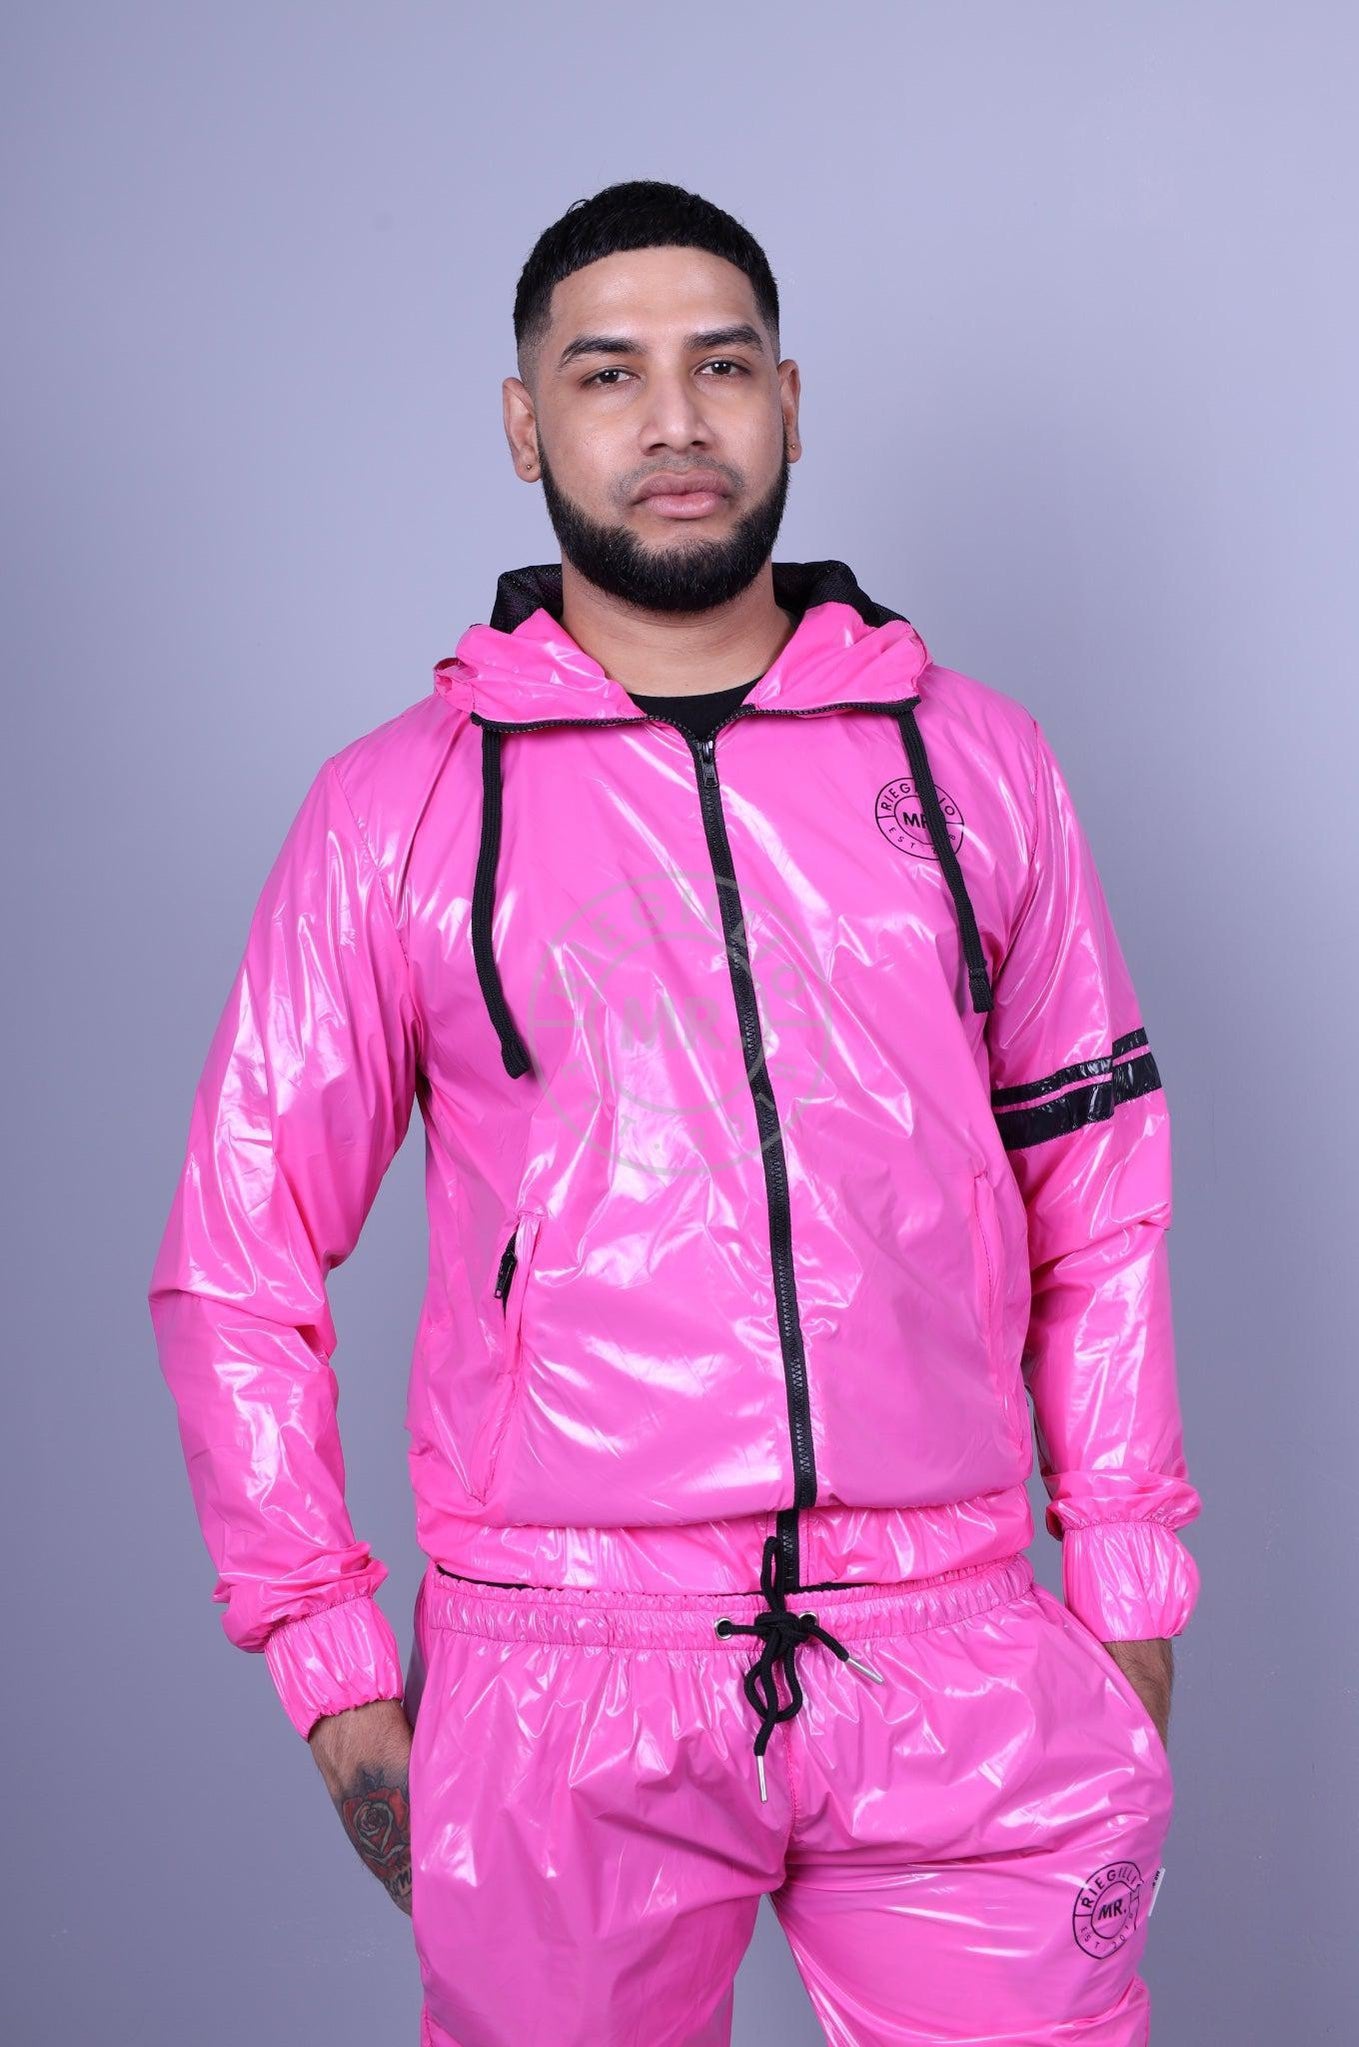 Shiny Nylon Tracksuit Jacket - Pink at MR. Riegillio